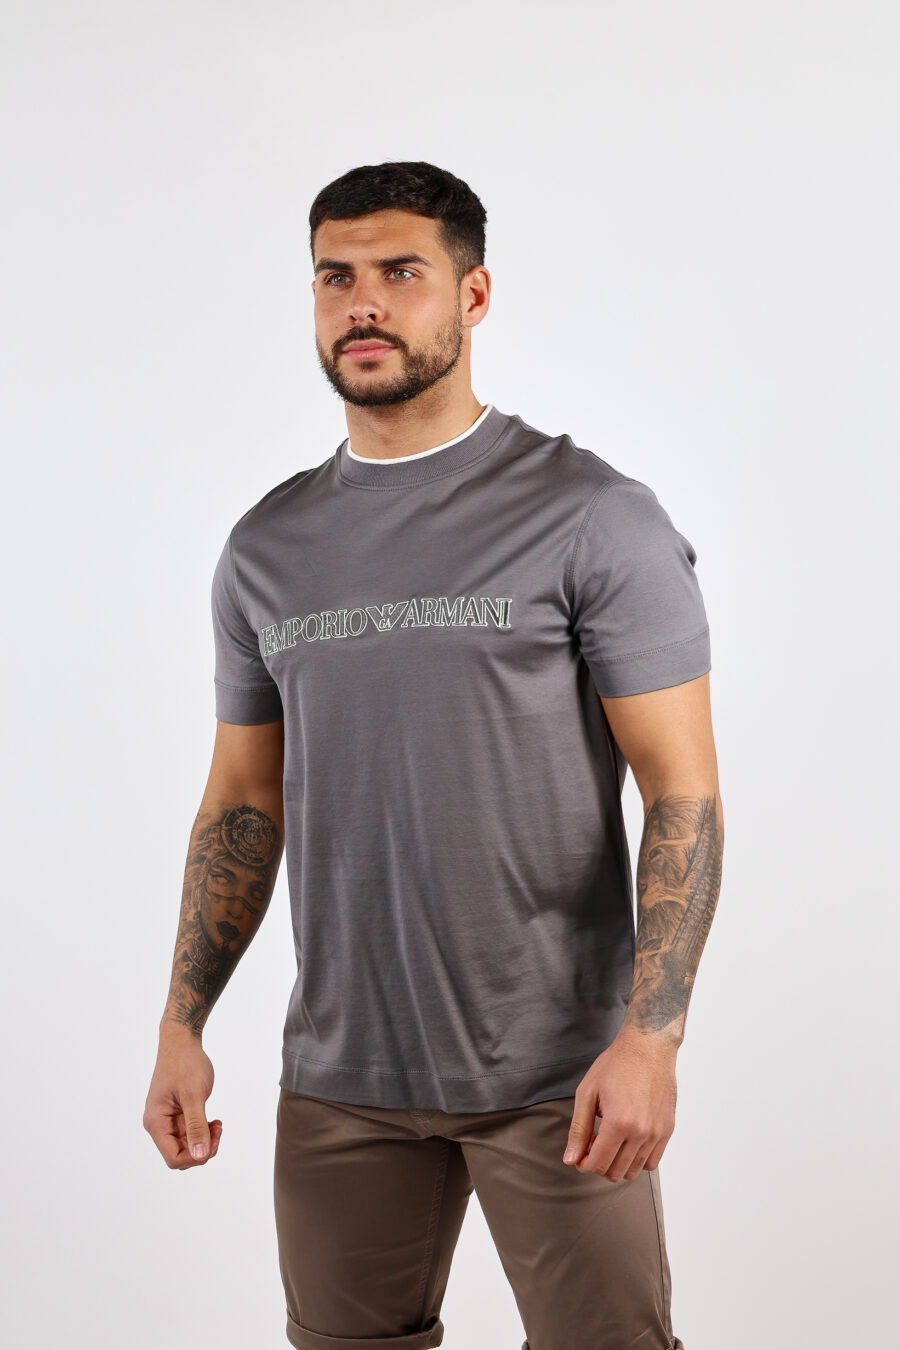 T-shirt gris avec maxilogo "emporio" - BLS Fashion 67